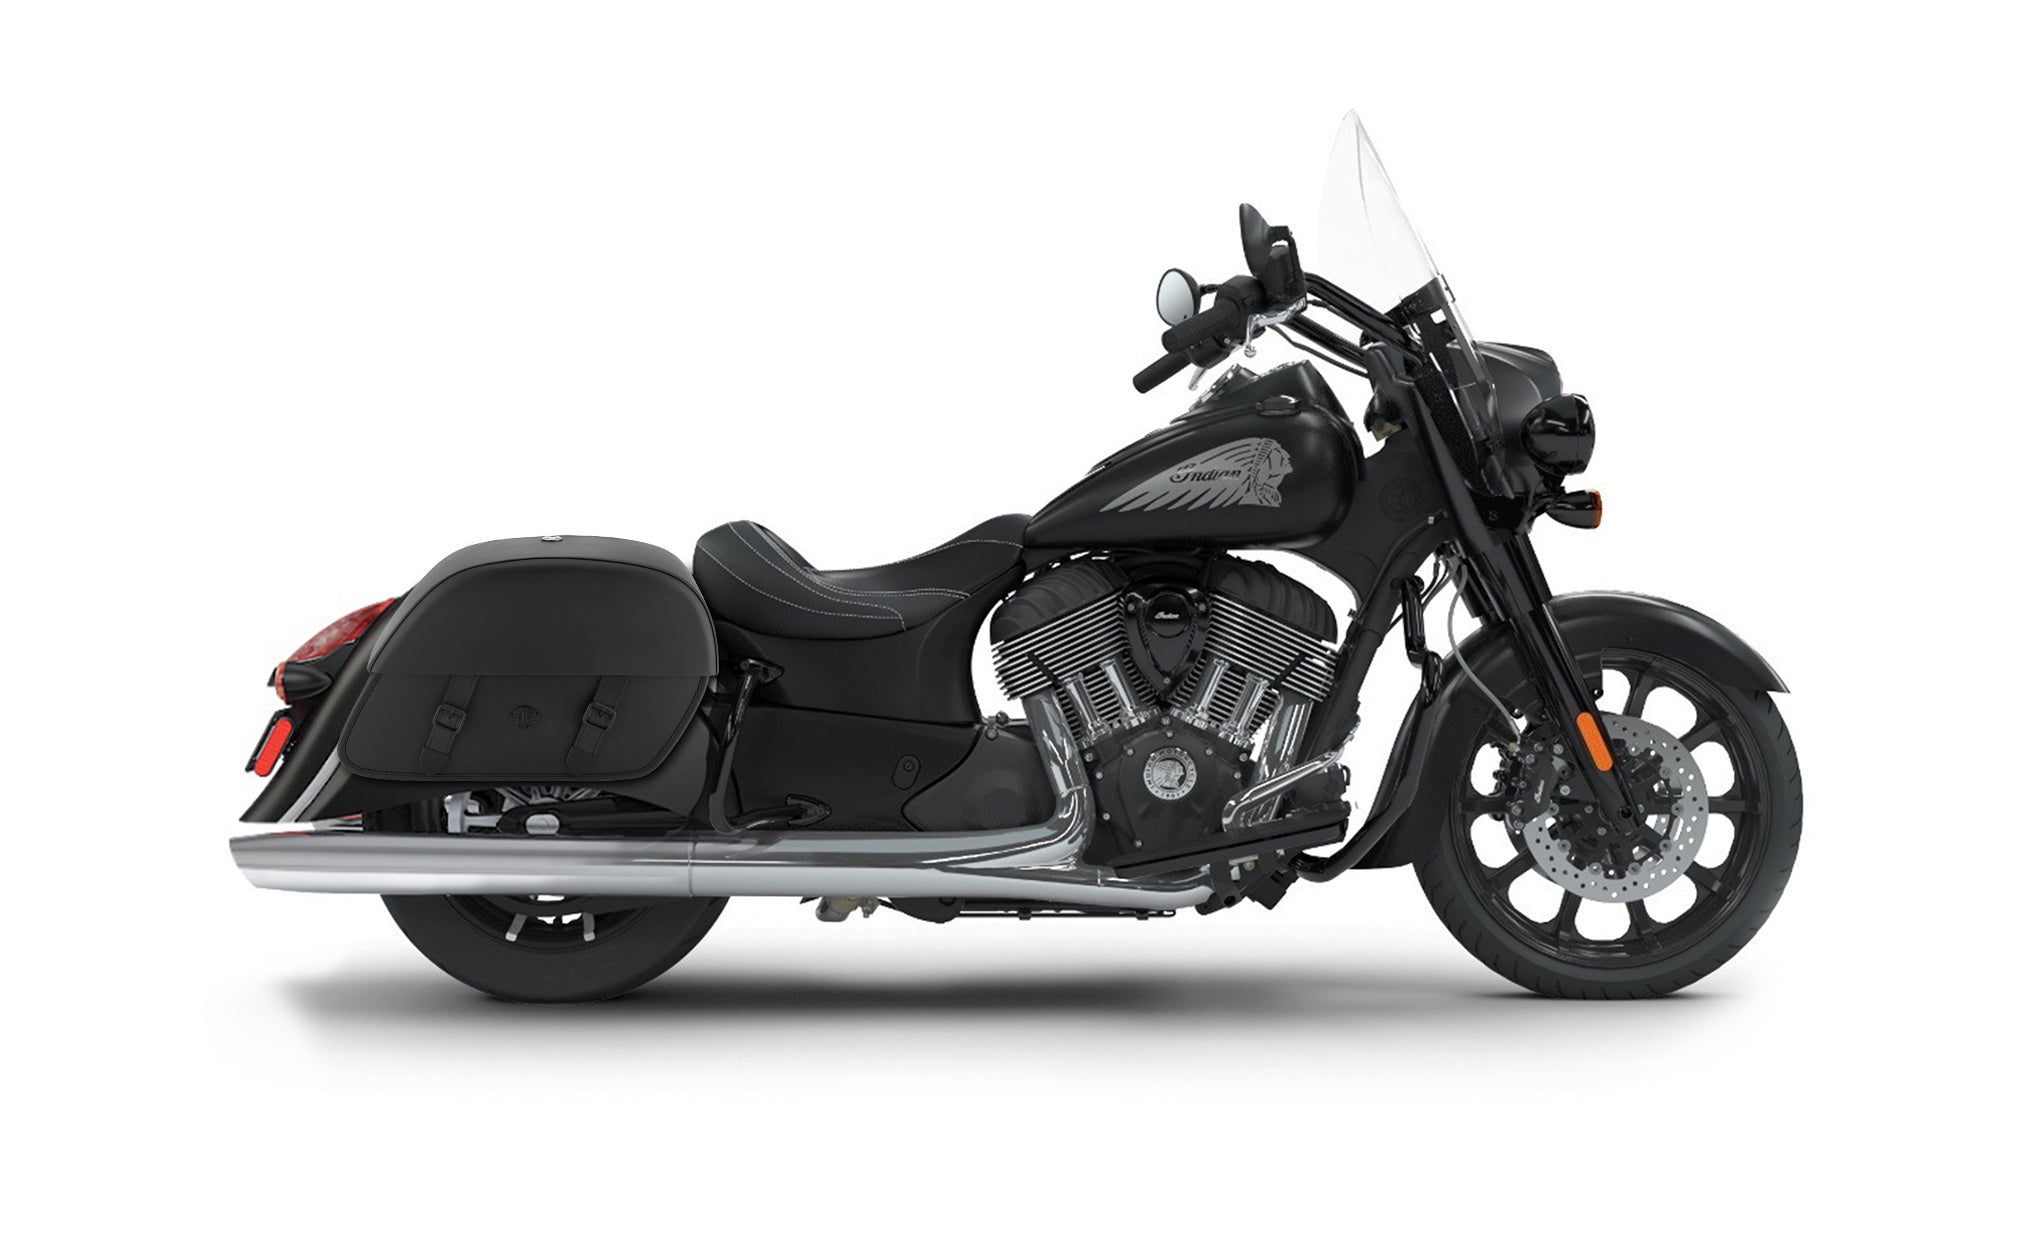 28L - Baelor Medium Indian Springfield Darkhorse Motorcycle Saddlebags @expand